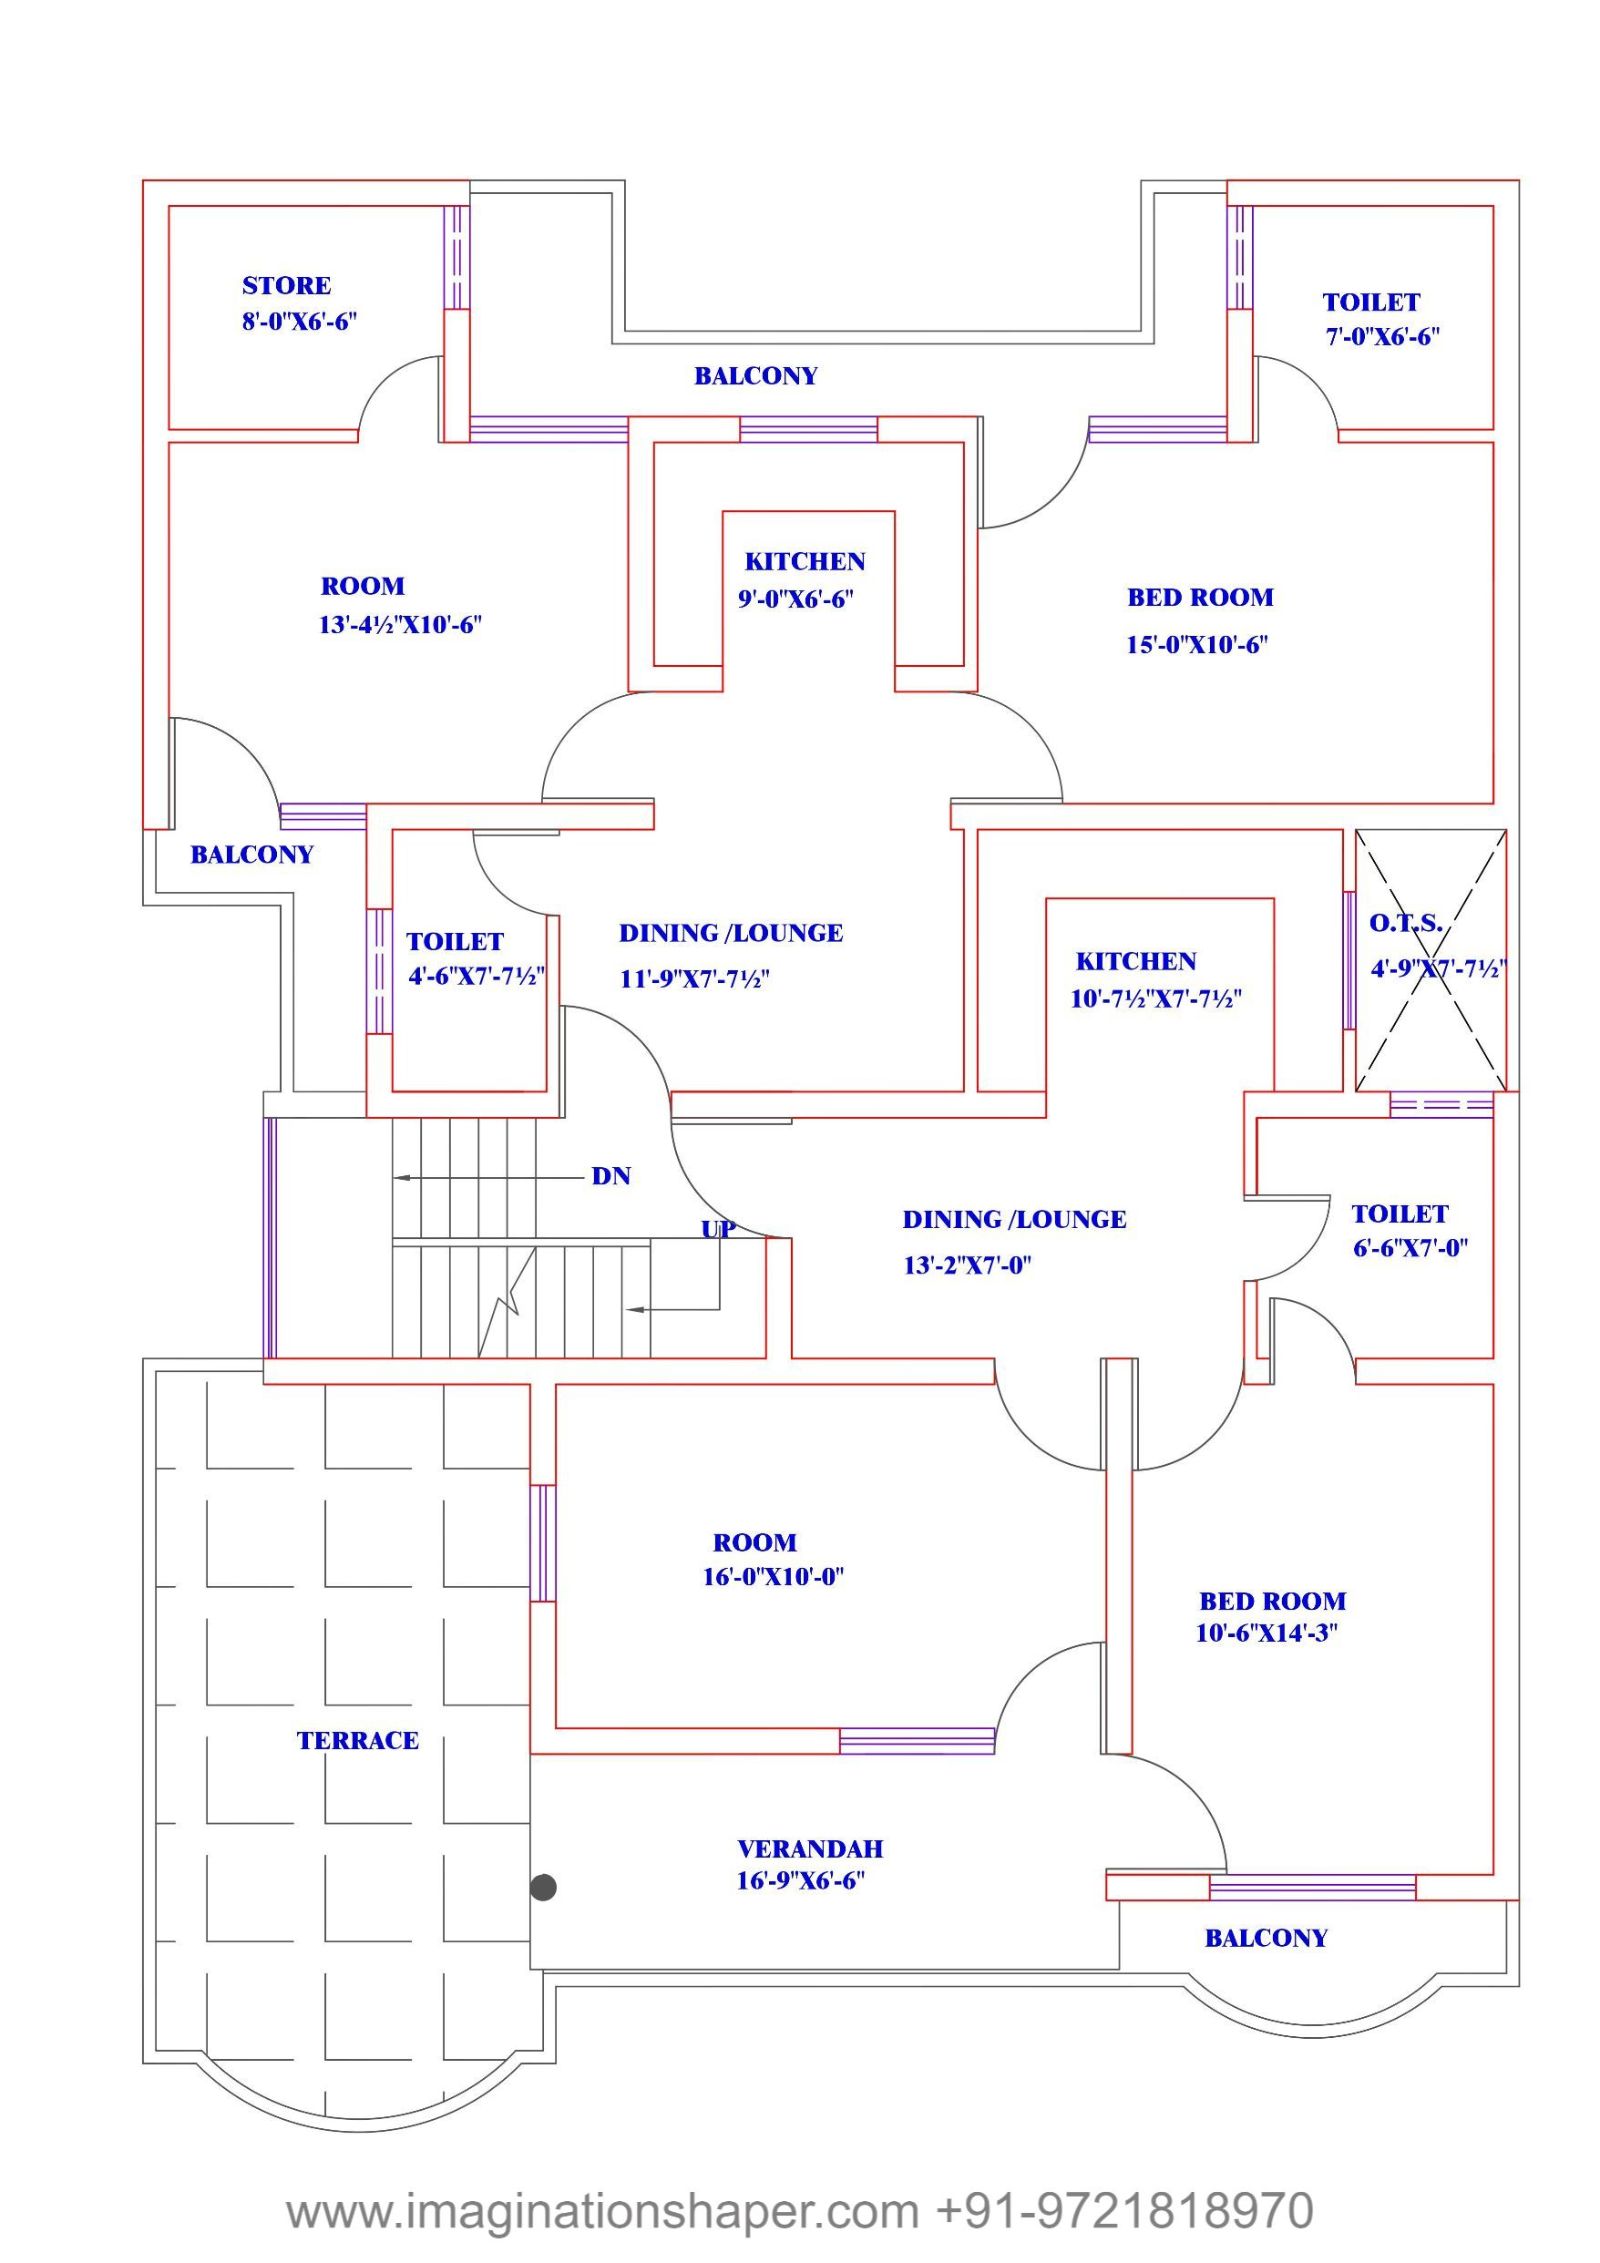 40x60 first floor rental purpose house plans